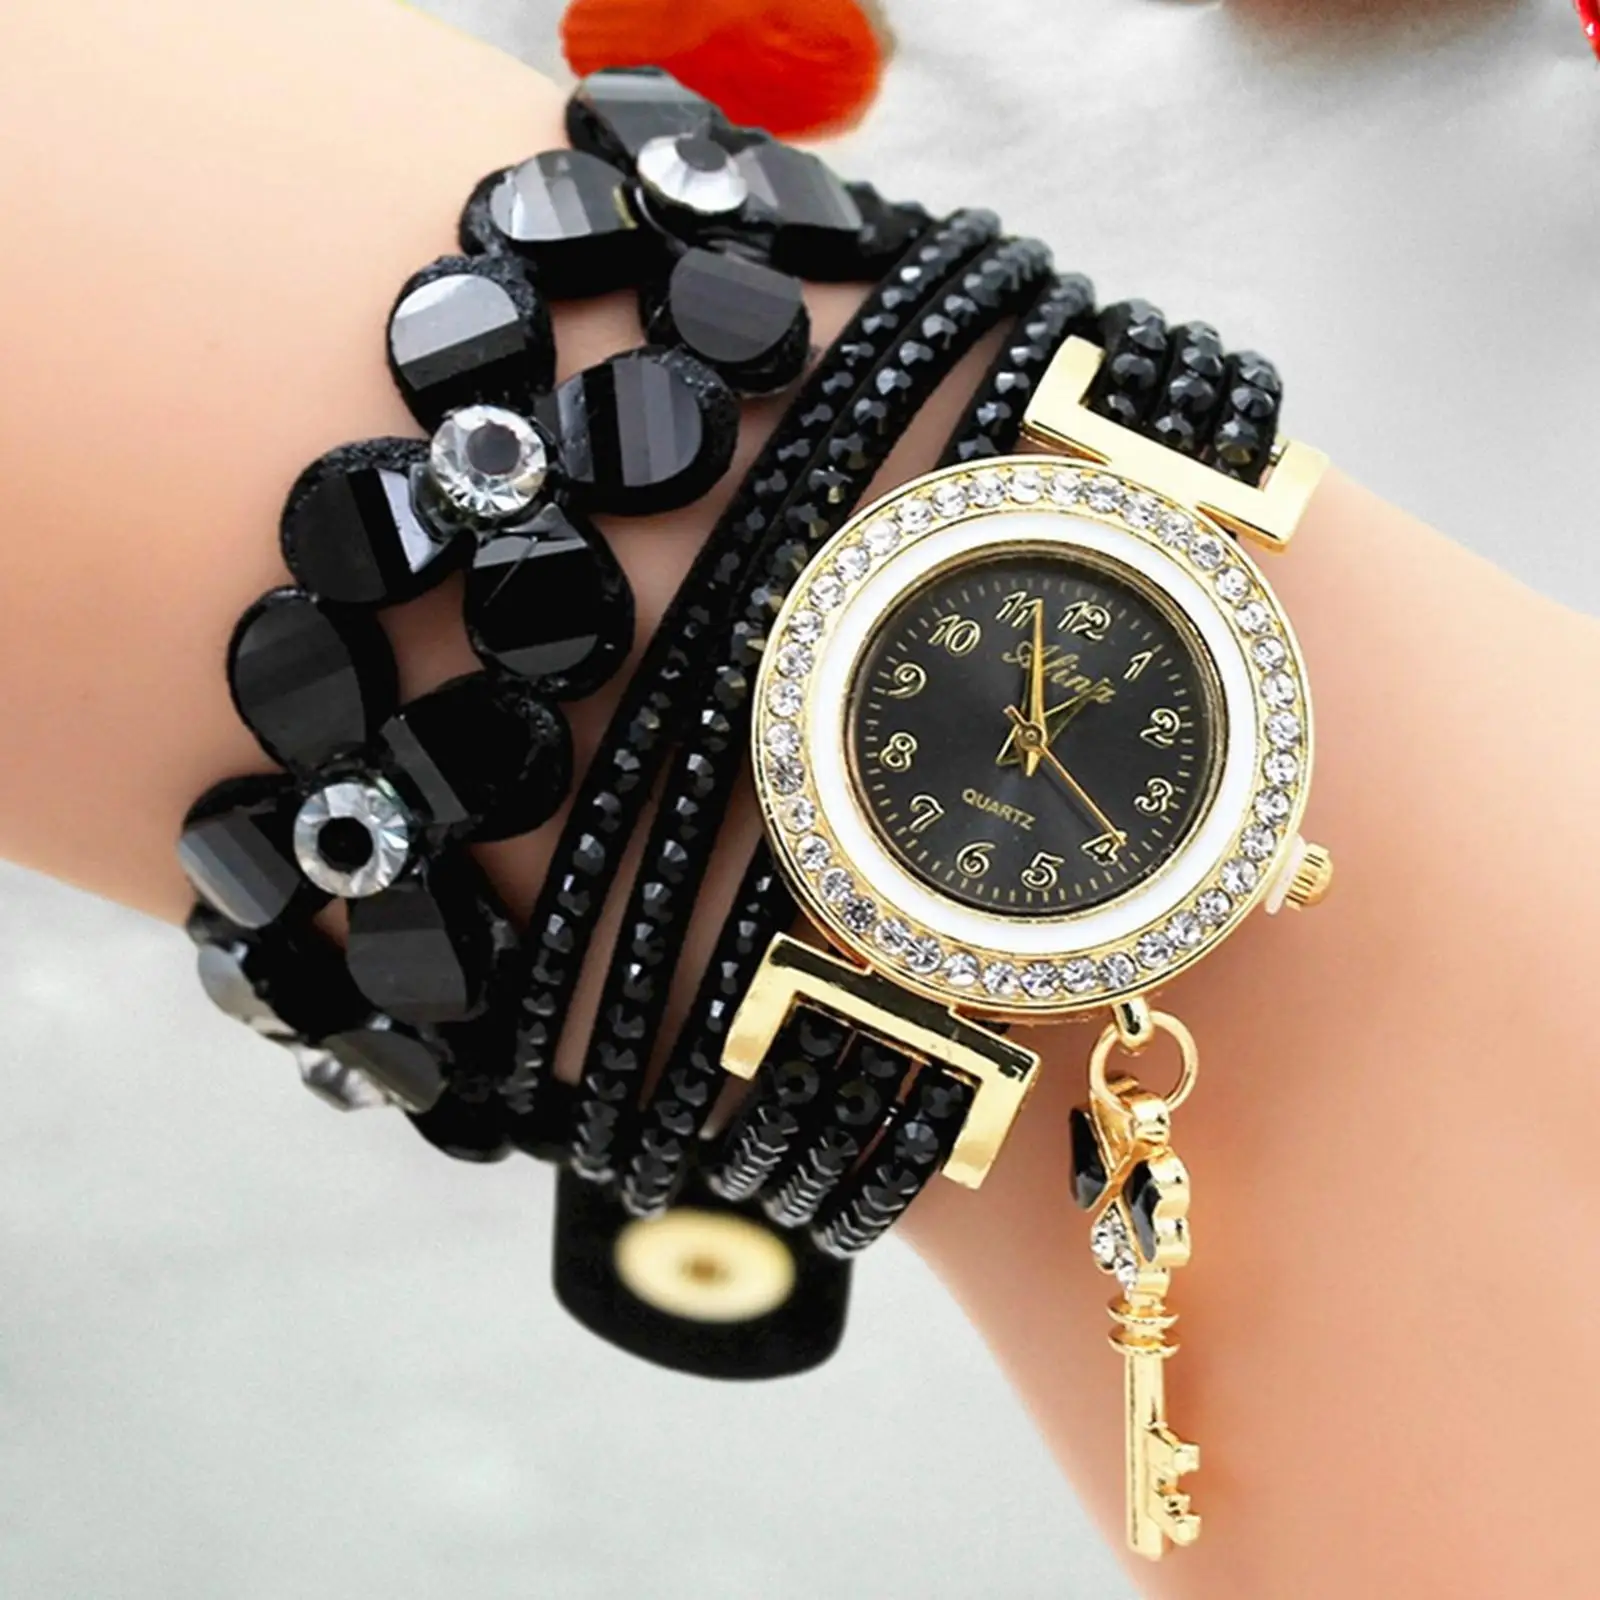 Bracelet Watch Lightweight Portable Fashion Versatile Girls Women Wristwatch for Shopping Backpacking Fishing Party Camping